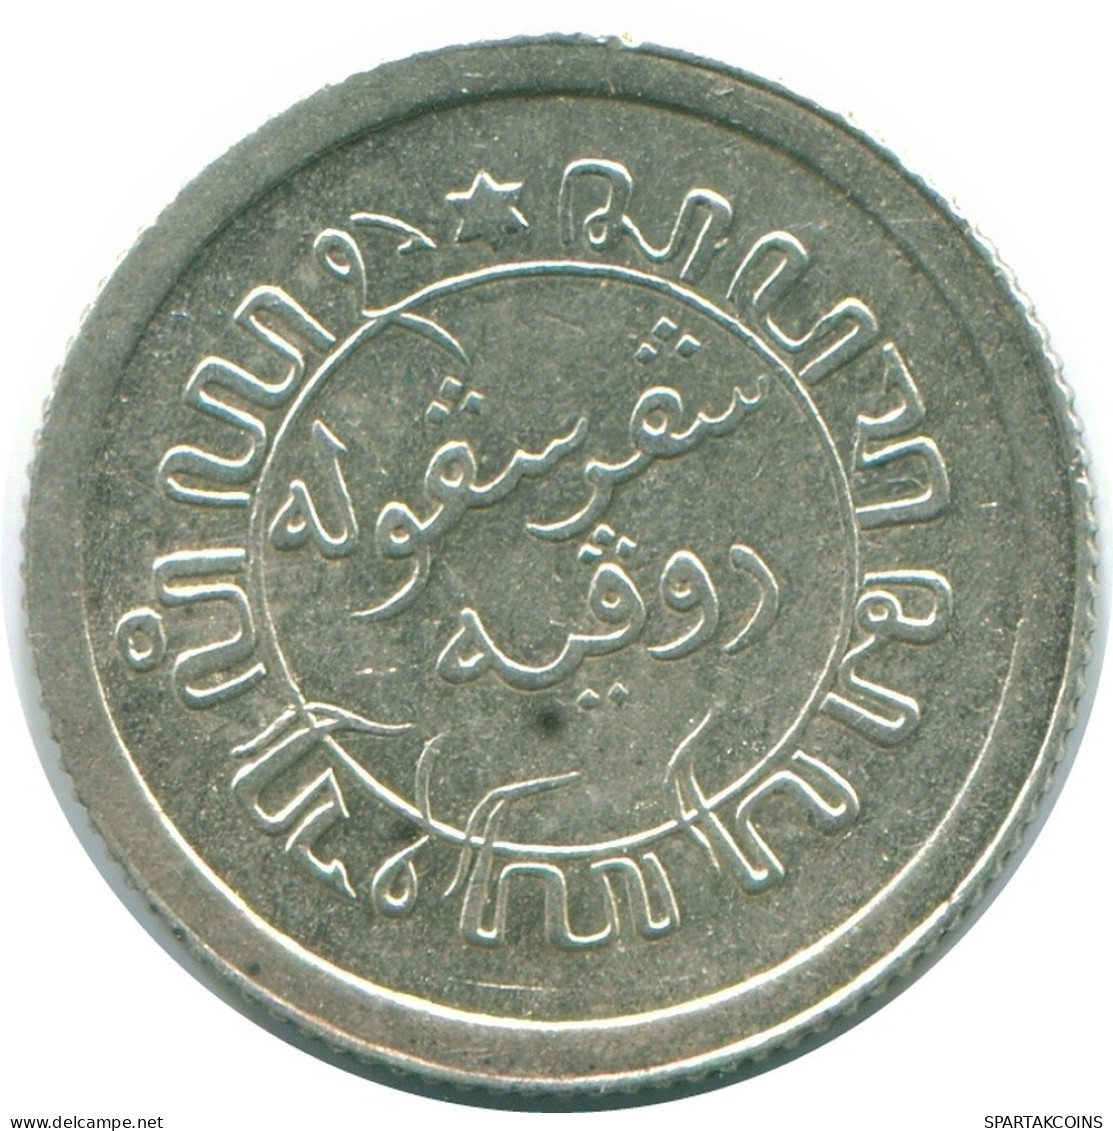 1/10 GULDEN 1918 NETHERLANDS EAST INDIES SILVER Colonial Coin #NL13326.3.U.A - Indes Néerlandaises